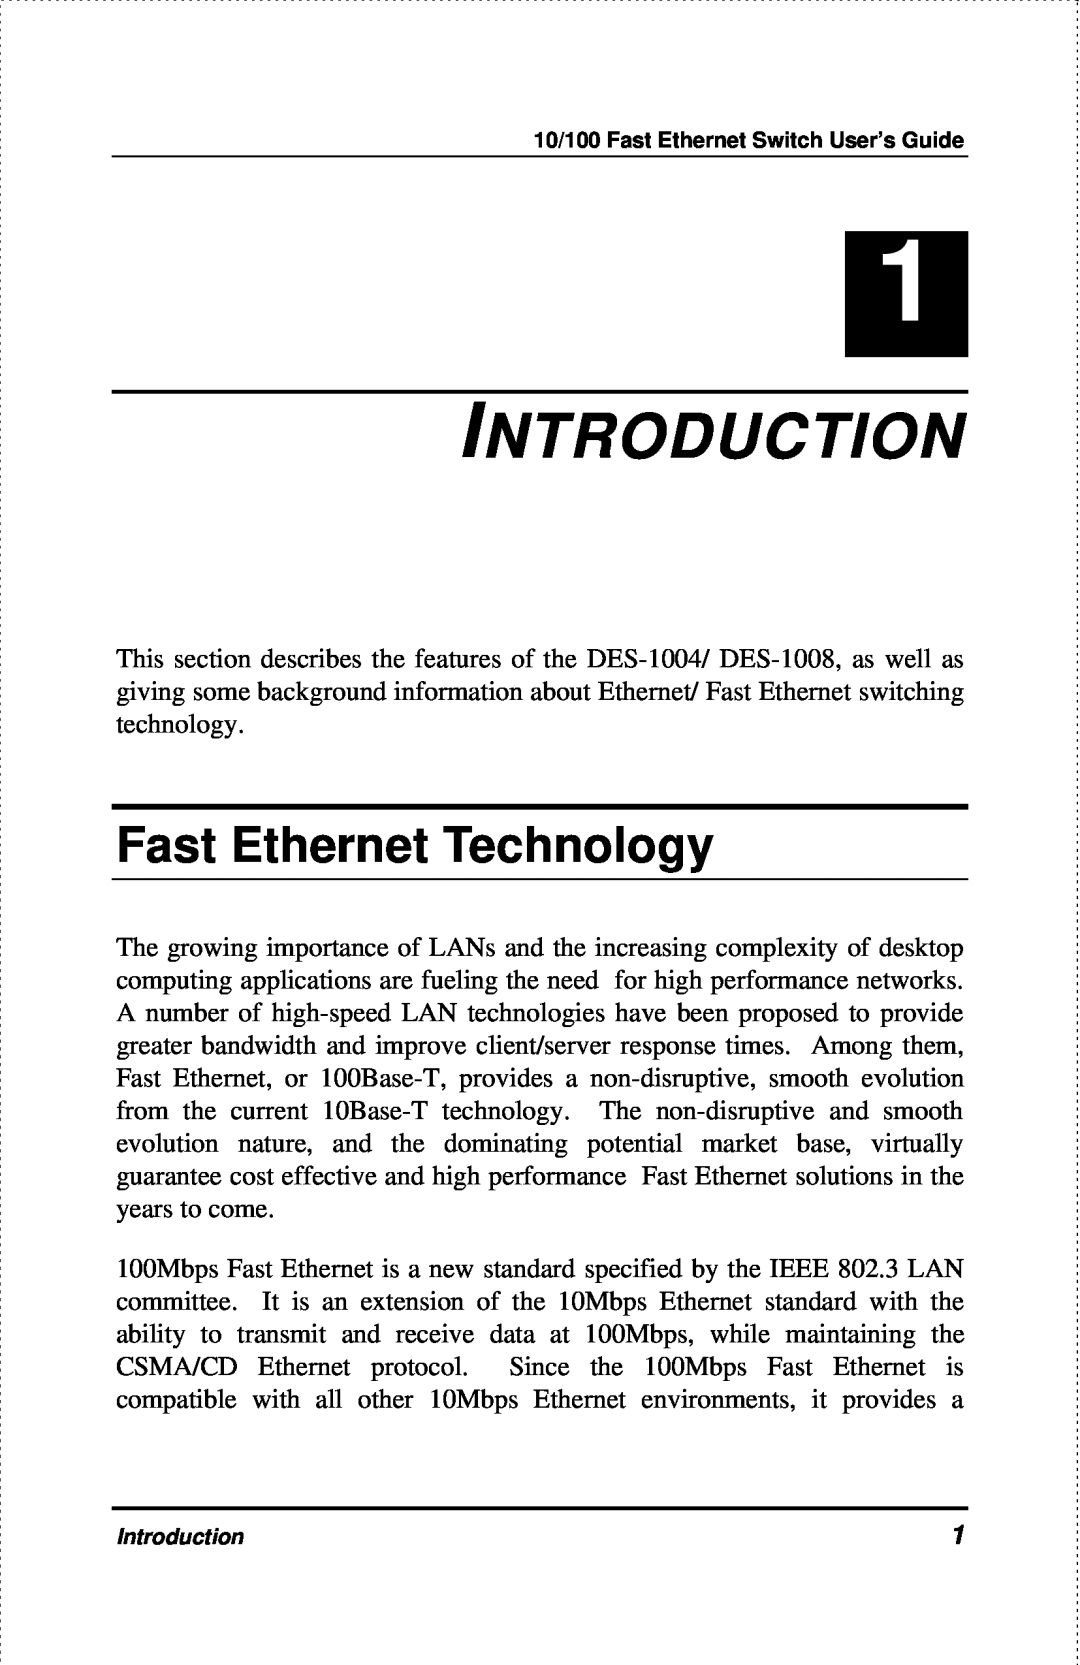 D-Link DES-1004 manual Introduction, Fast Ethernet Technology 